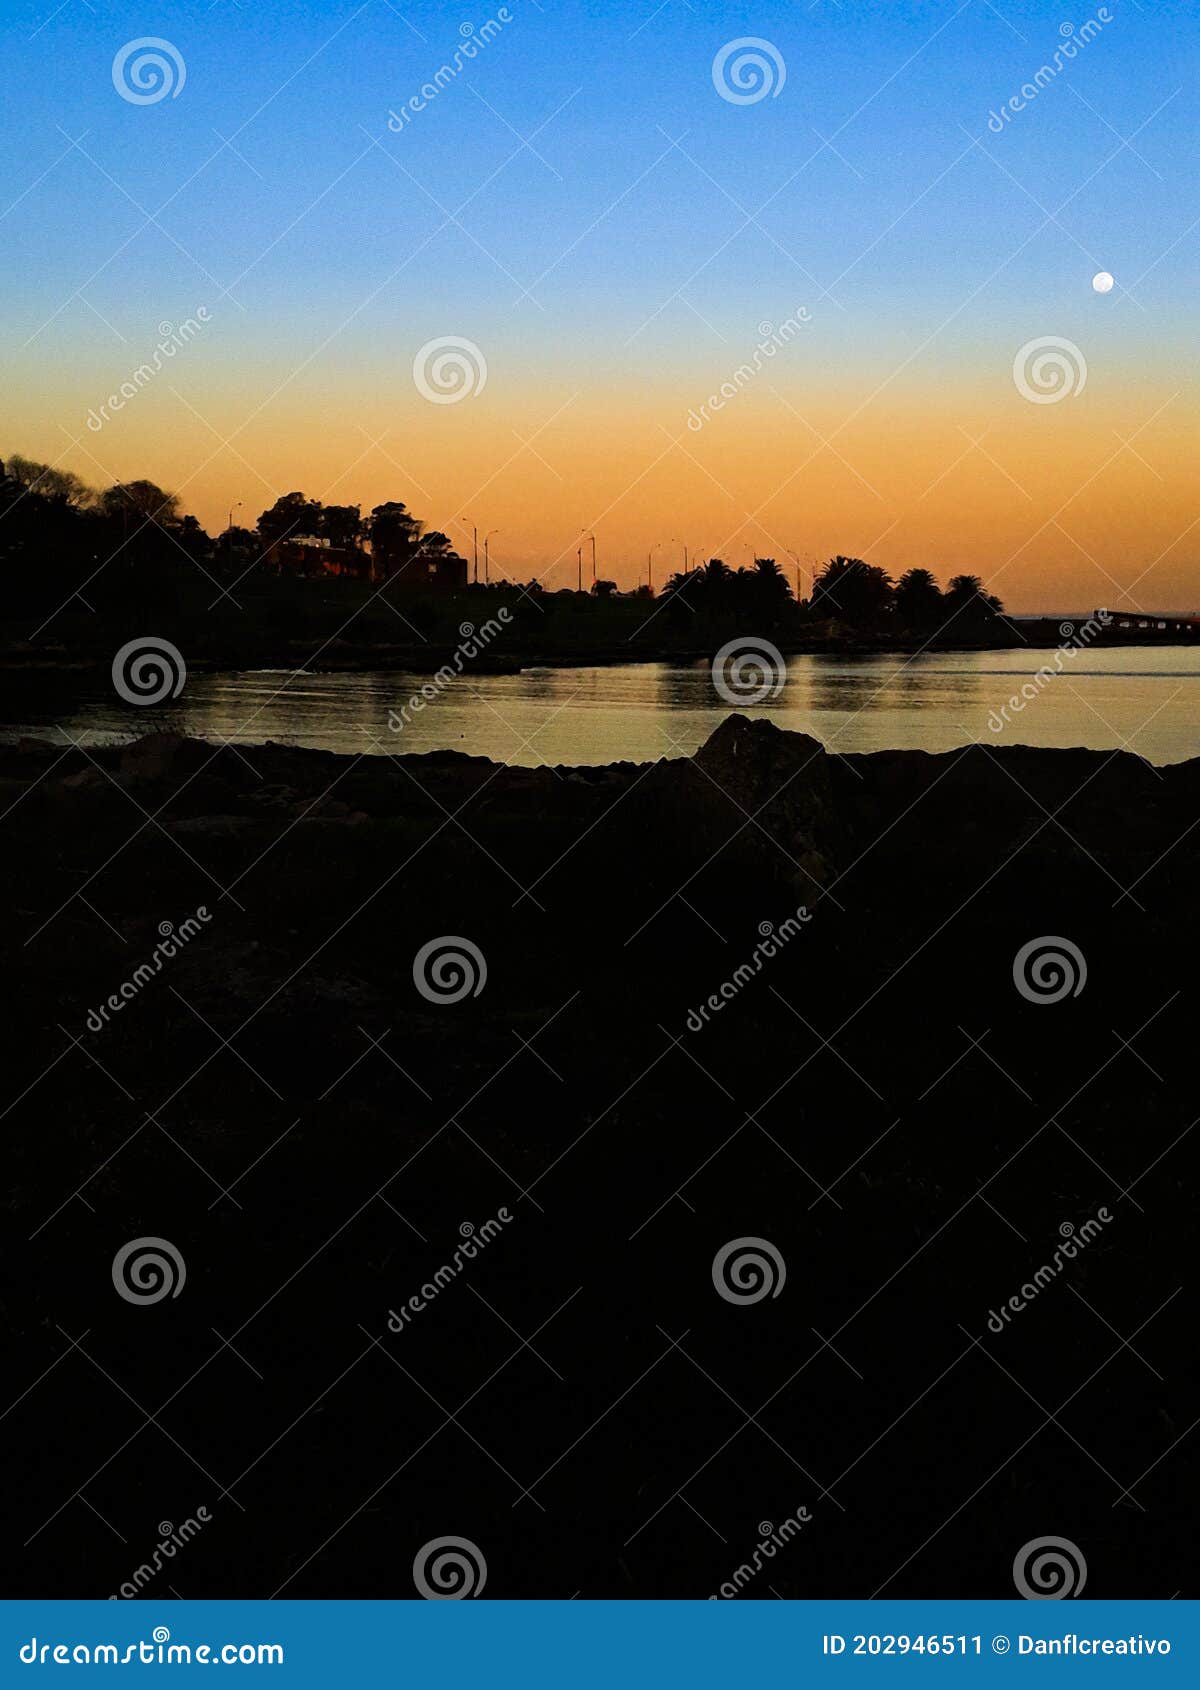 sunset coastal scene buceo port, montevideo uruguay